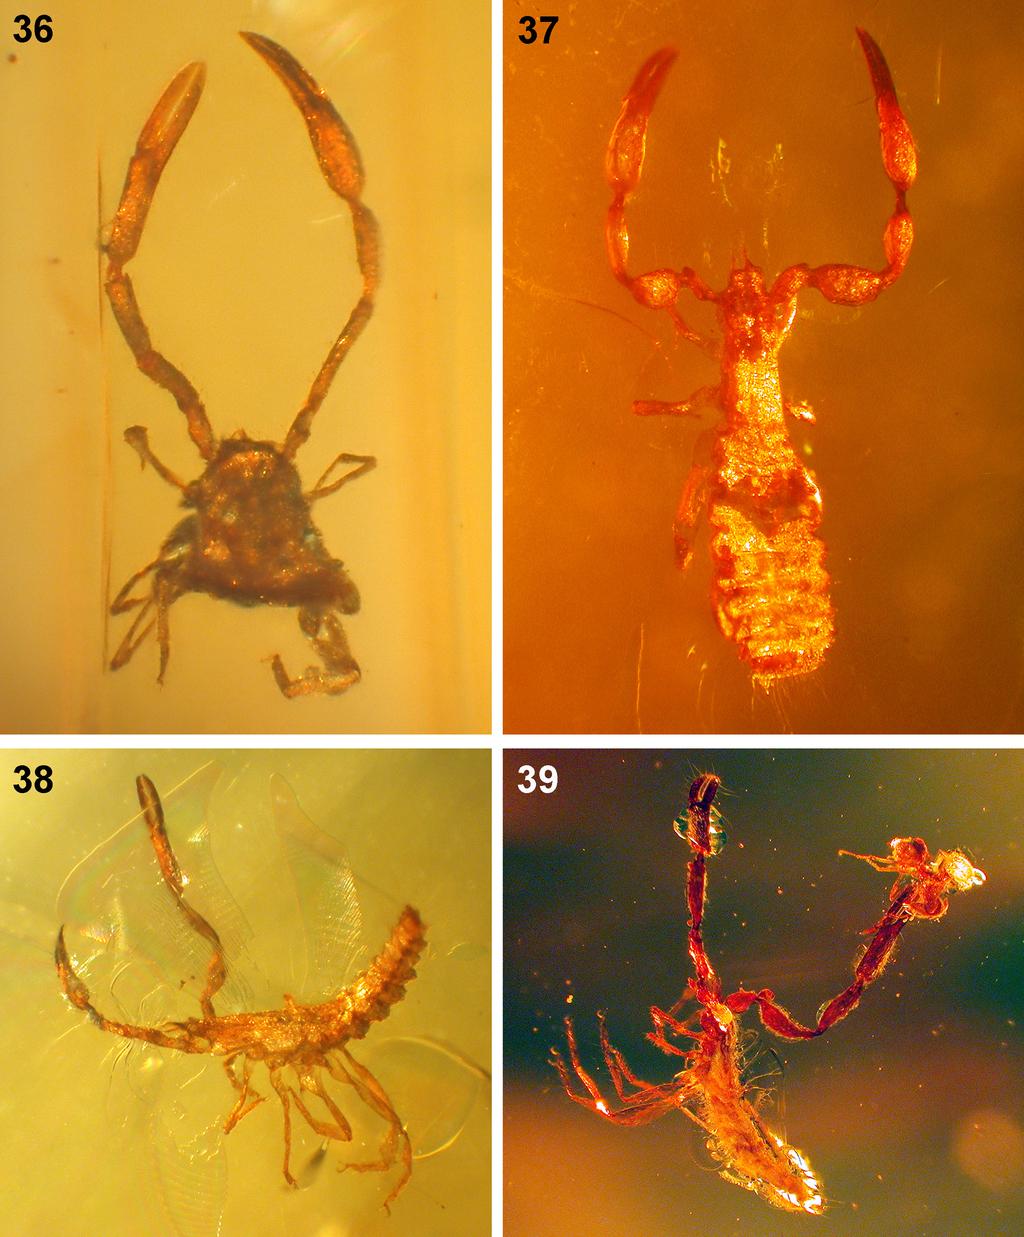 Pseudoscorpions (Arachnida, Chelonethi) in Mexican amber 71 Figures 36 39, Cheliferoidea in amber from Simojovel.